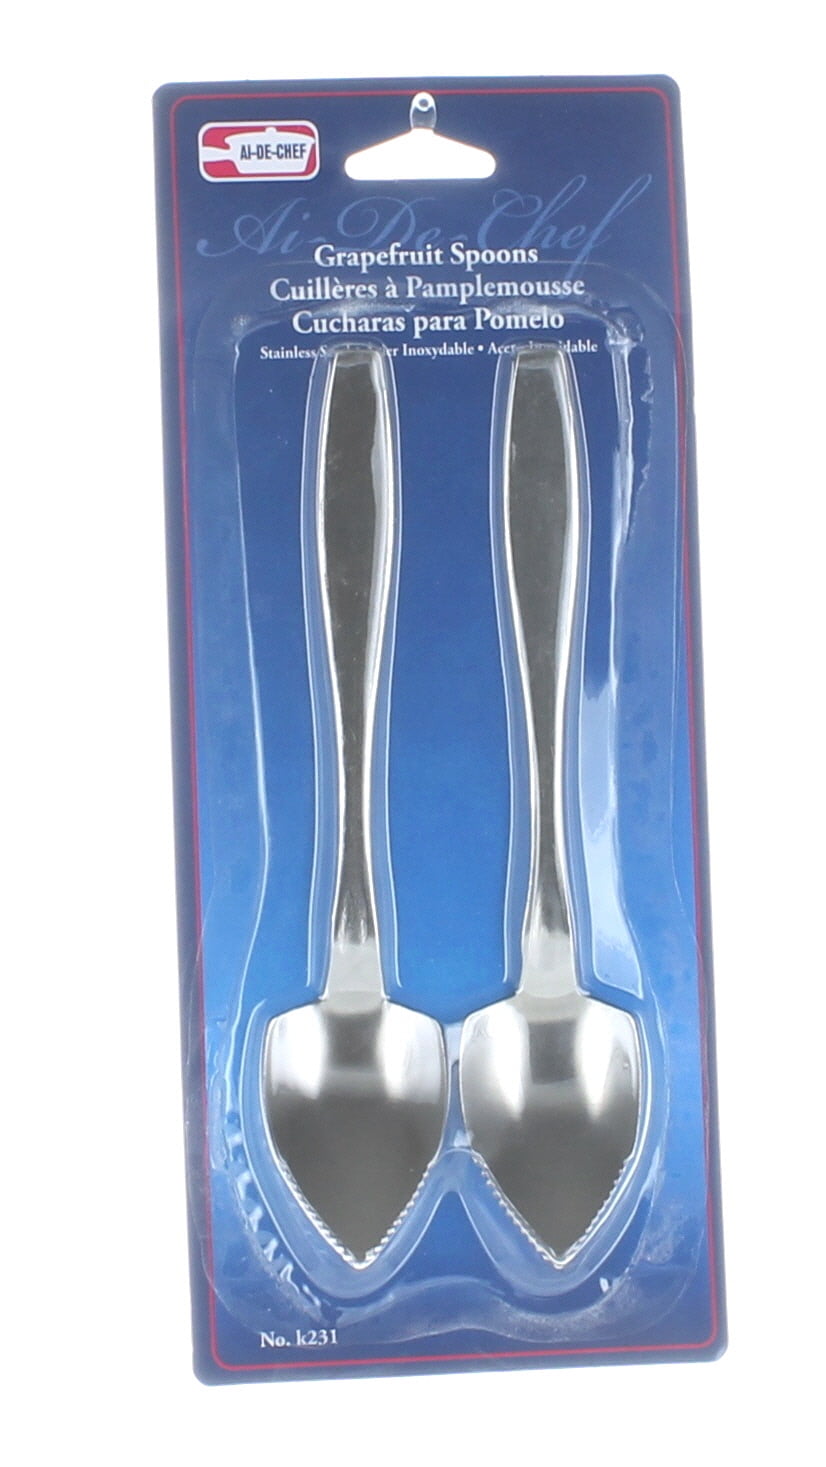 2 PCS Thick Stainless Steel Grapefruit Spoon Dessert Spoon Serrated Edge Spo@LS 